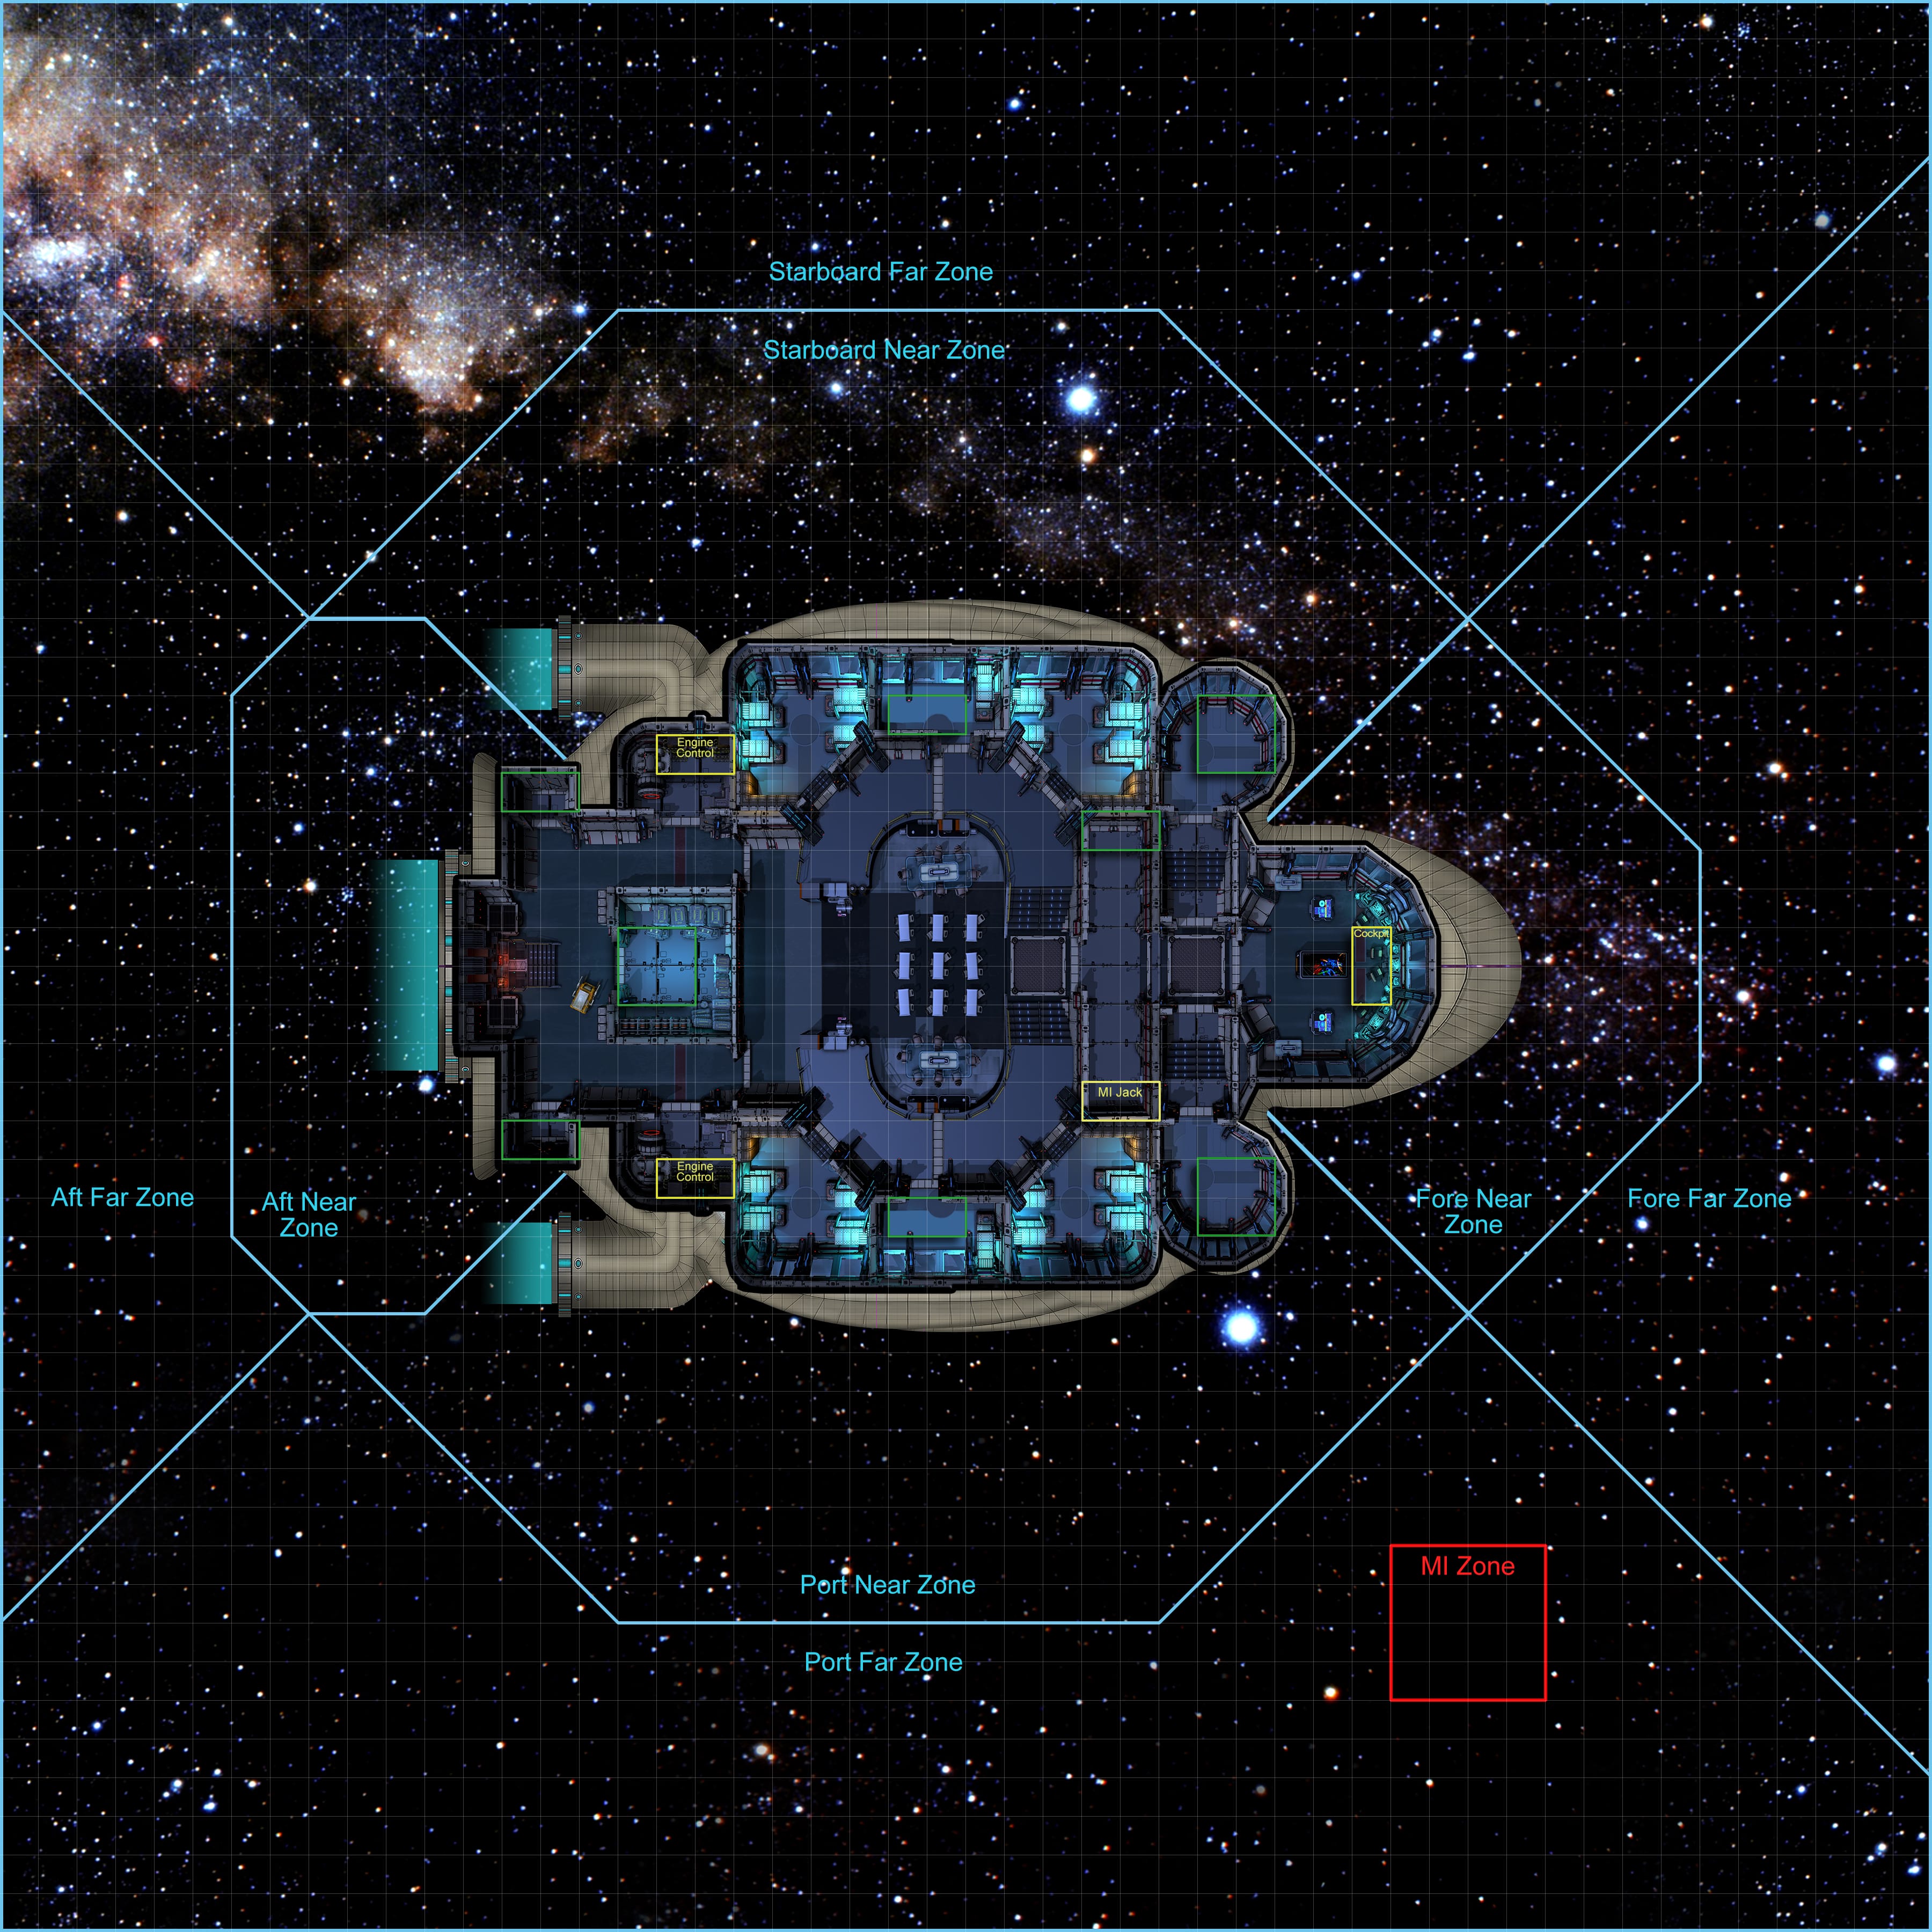 PC Spaceship: The Wanderer by Jose "Gigio" Esteras